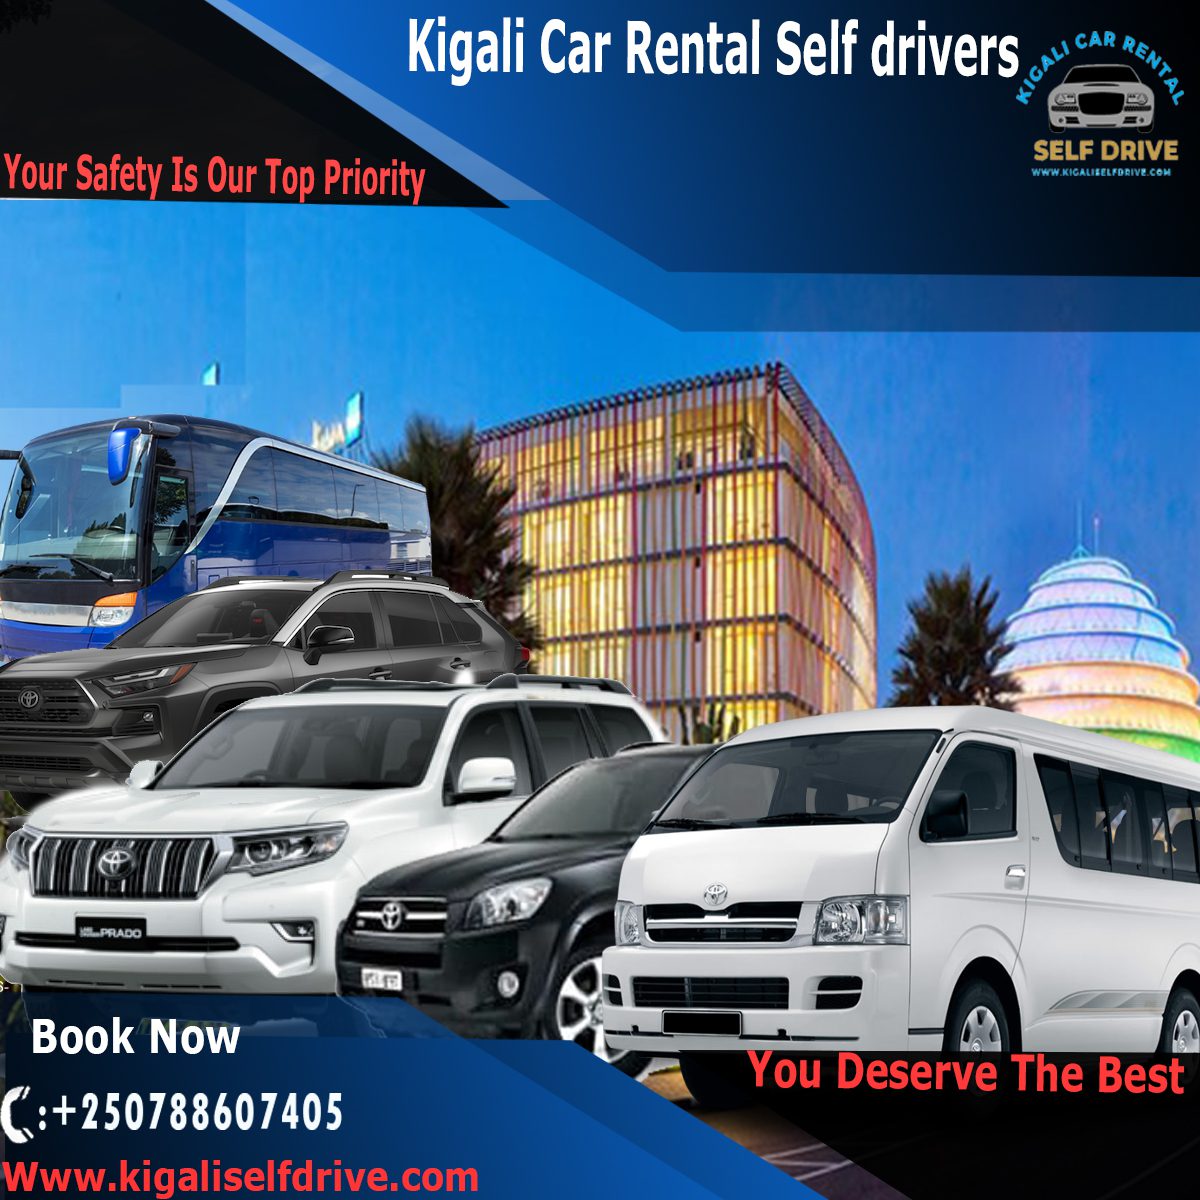 Discover Rwanda with Kigali Car Rental Self Drive - Kigali Car Rental ...